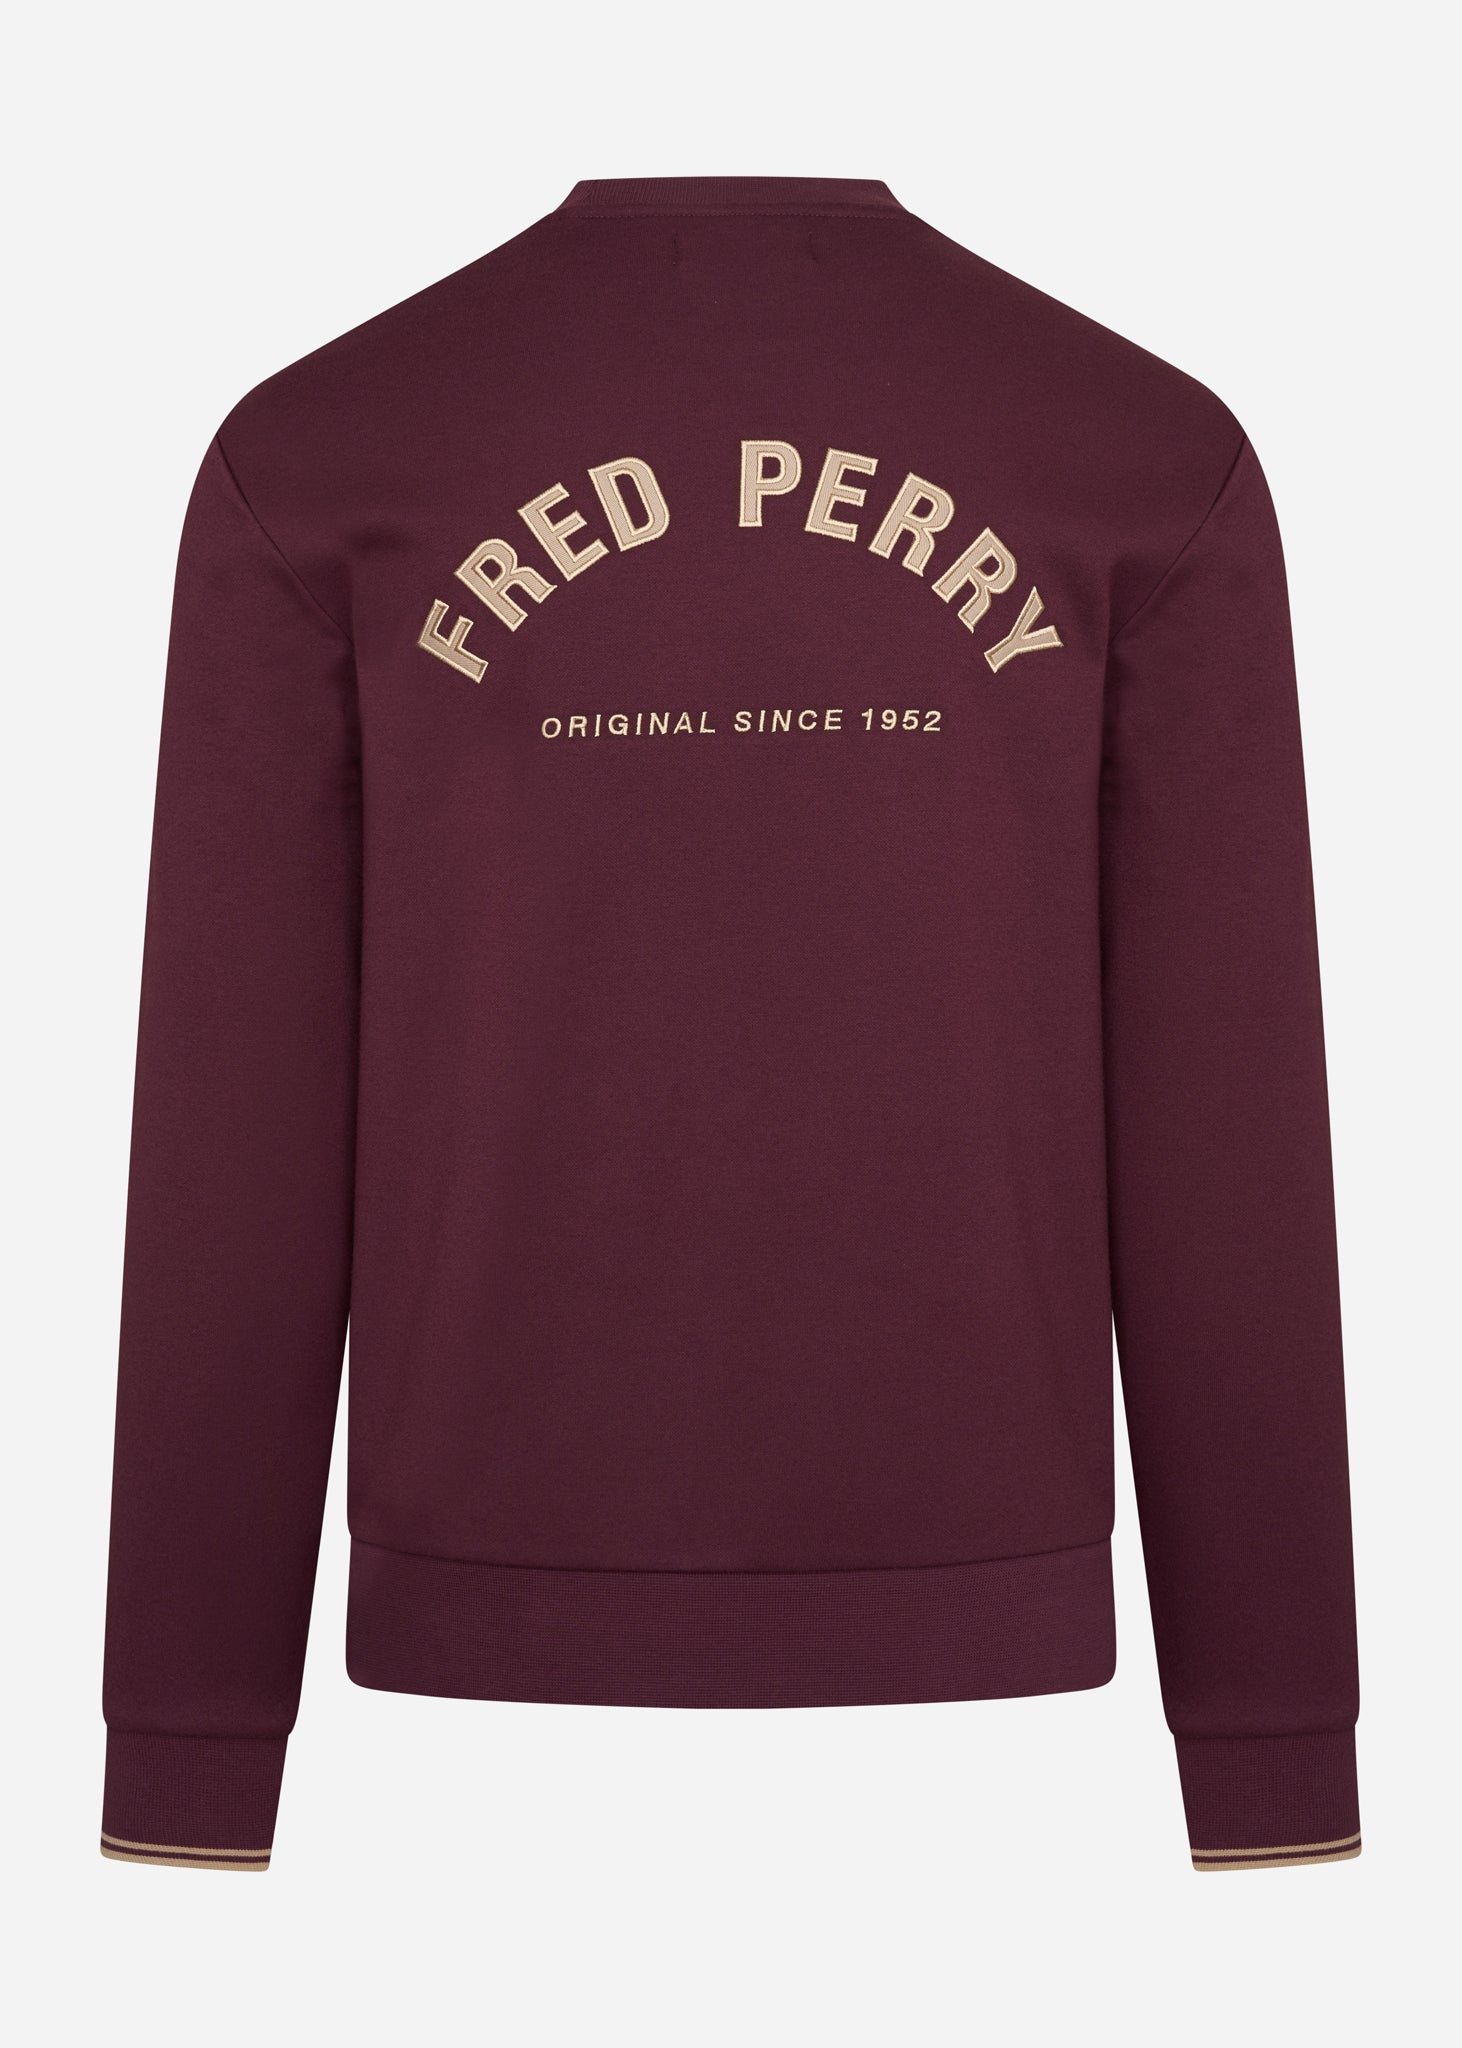 fred perry crewneck sweater burgundy back print